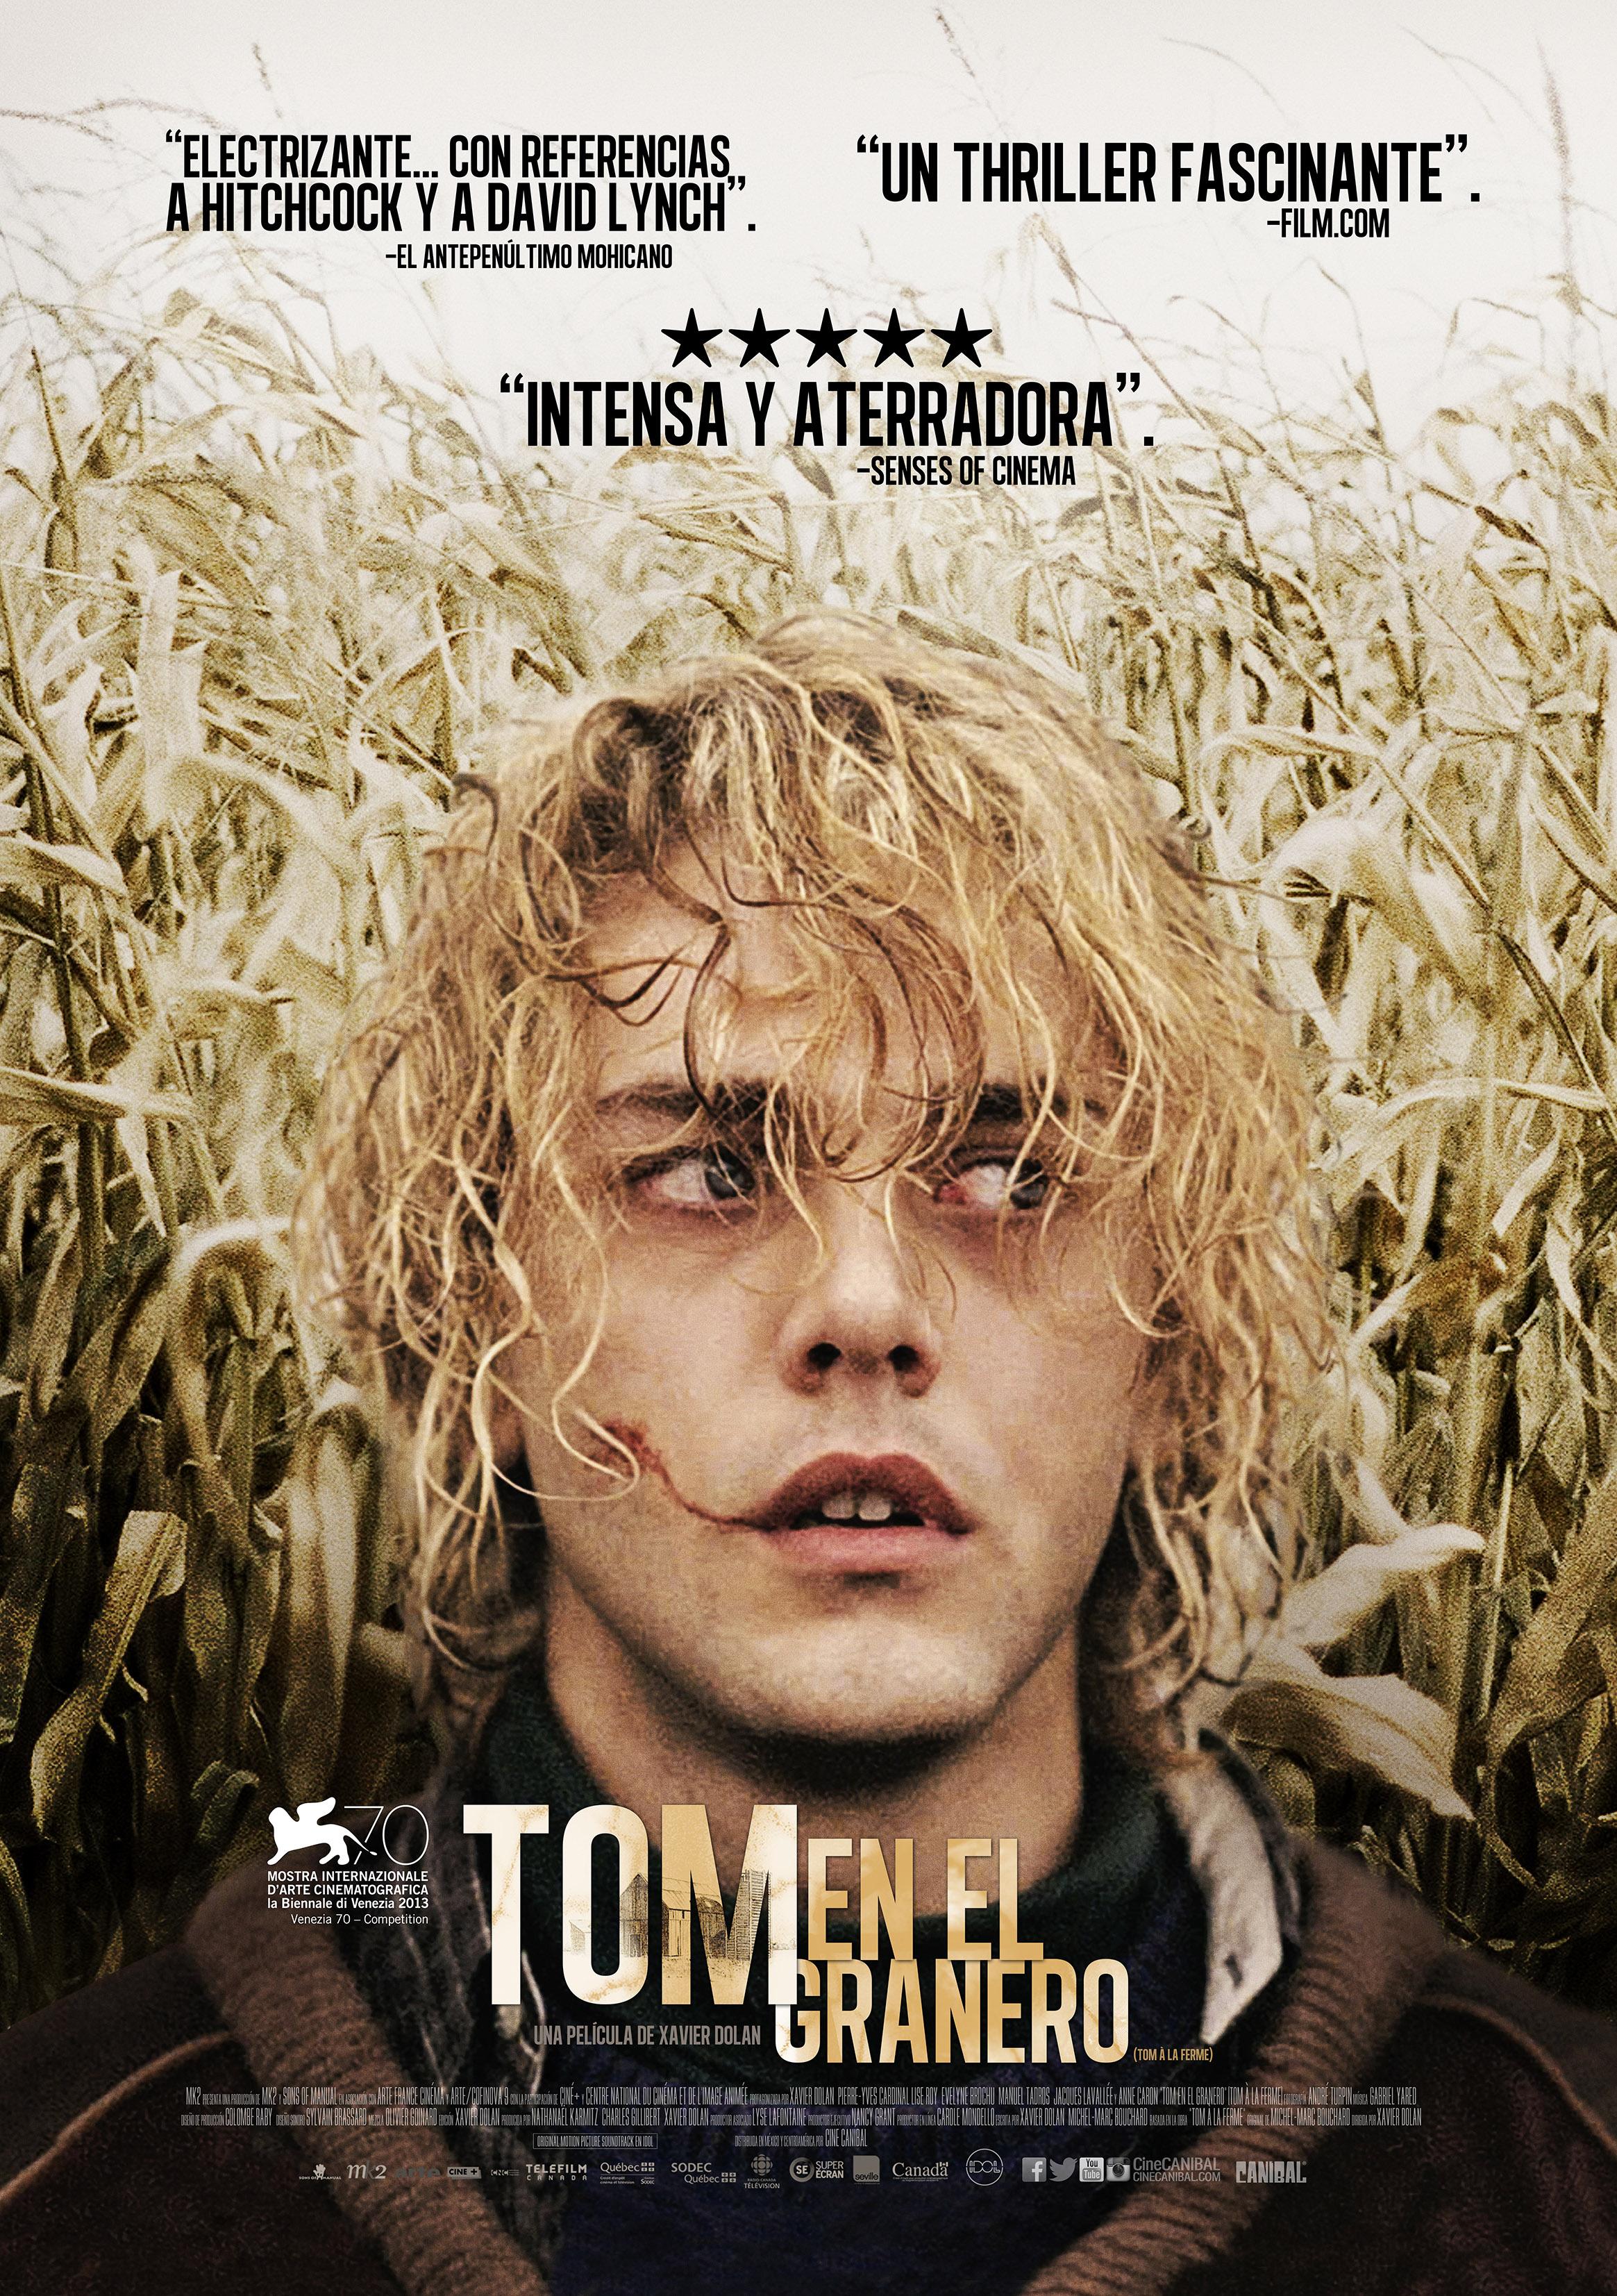 Постер фильма Том на ферме | Tom à la ferme